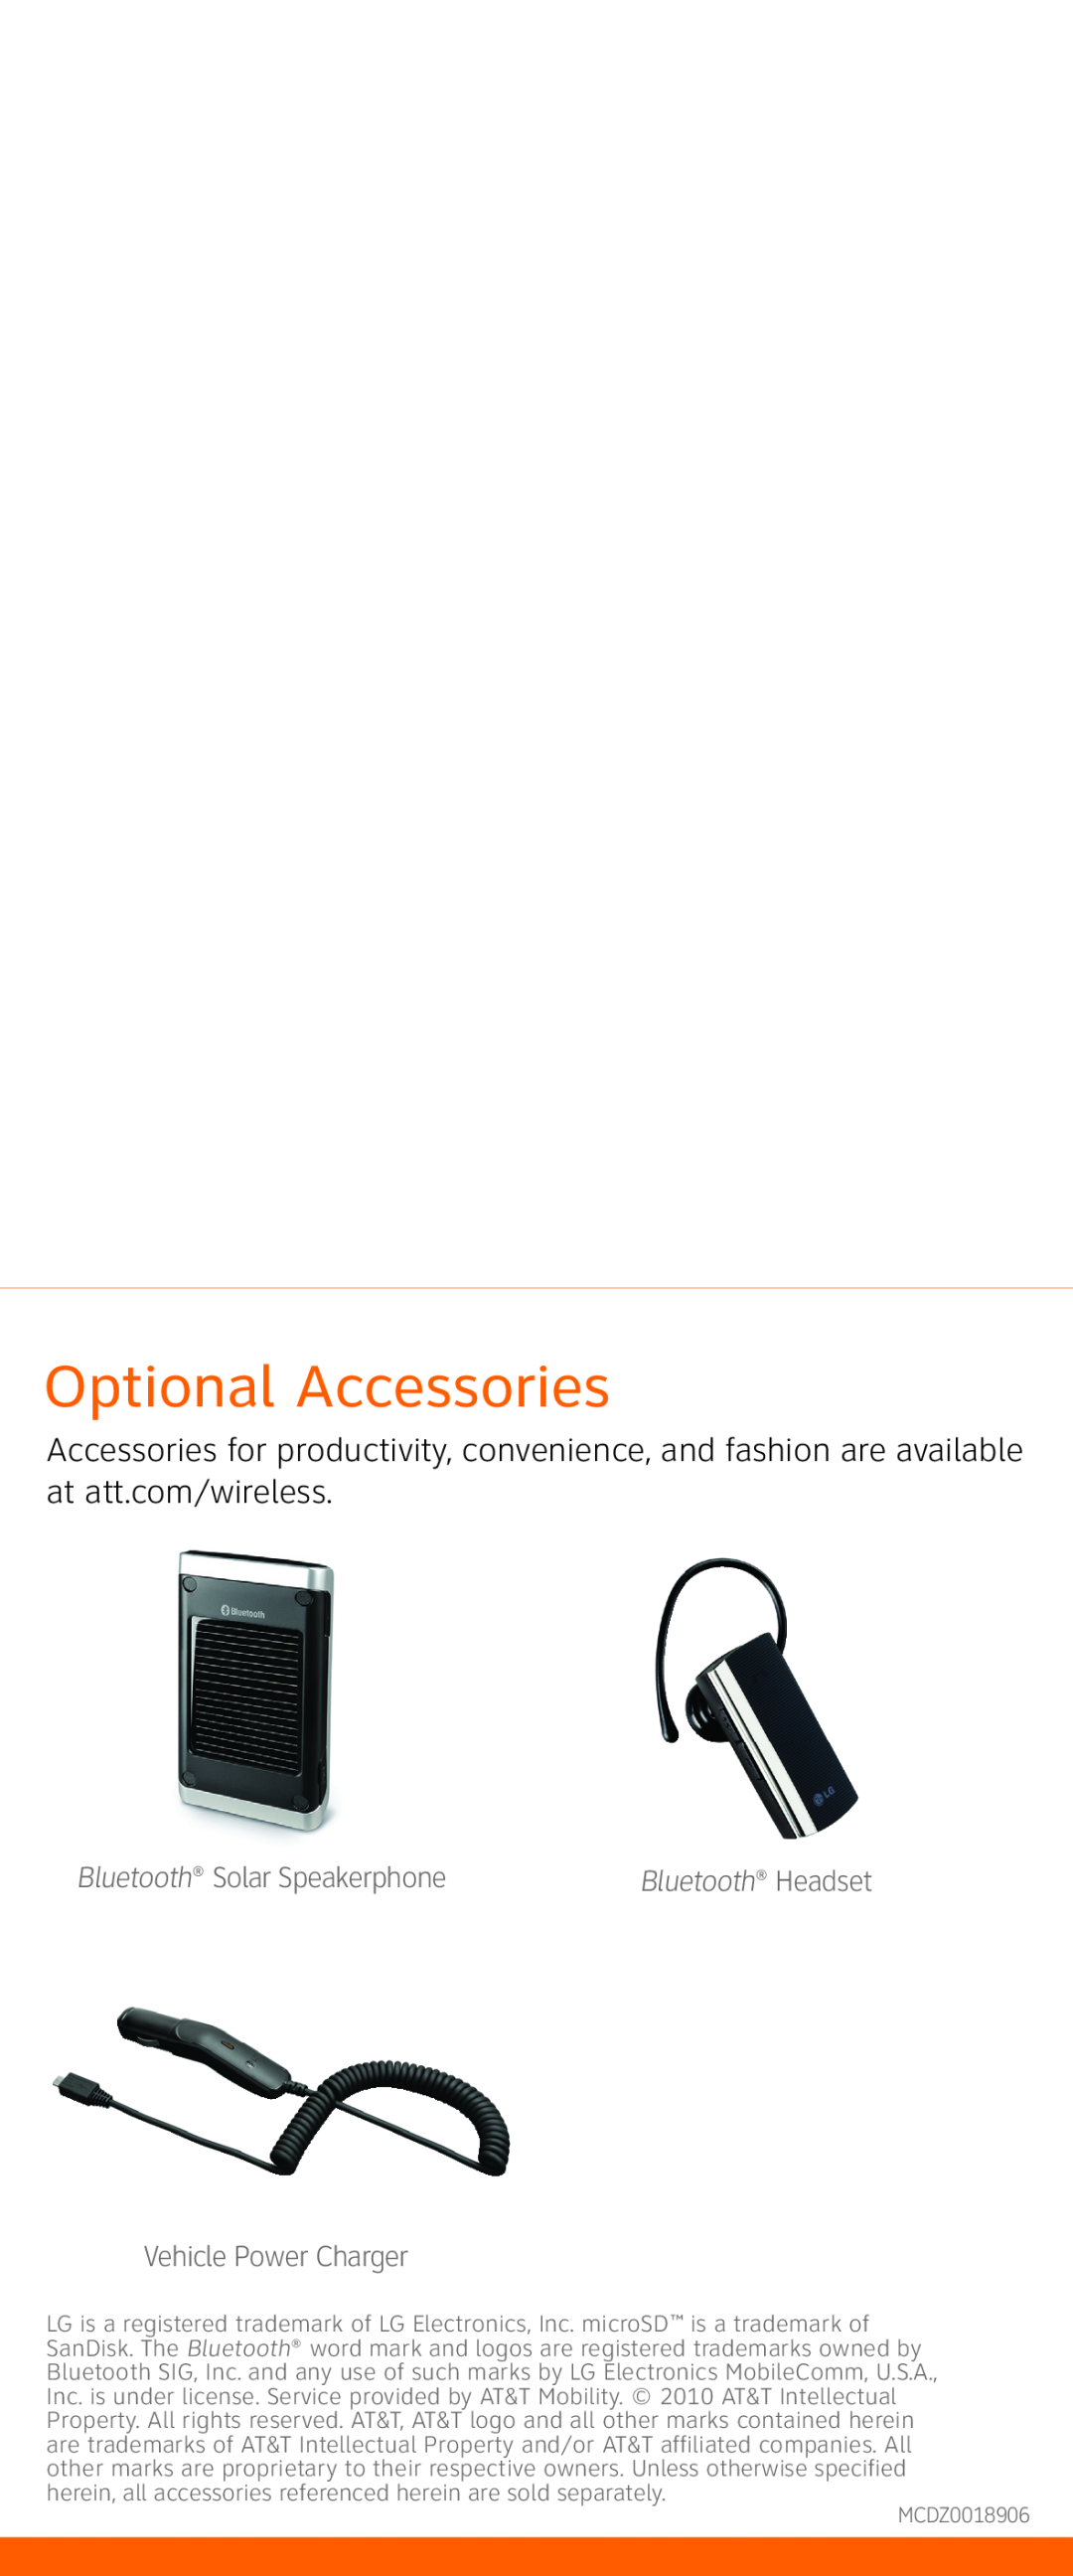 LG Electronics GU292 Optional Accessories, Bluetooth Solar Speakerphone, Vehicle Power Charger, Bluetooth Headset 